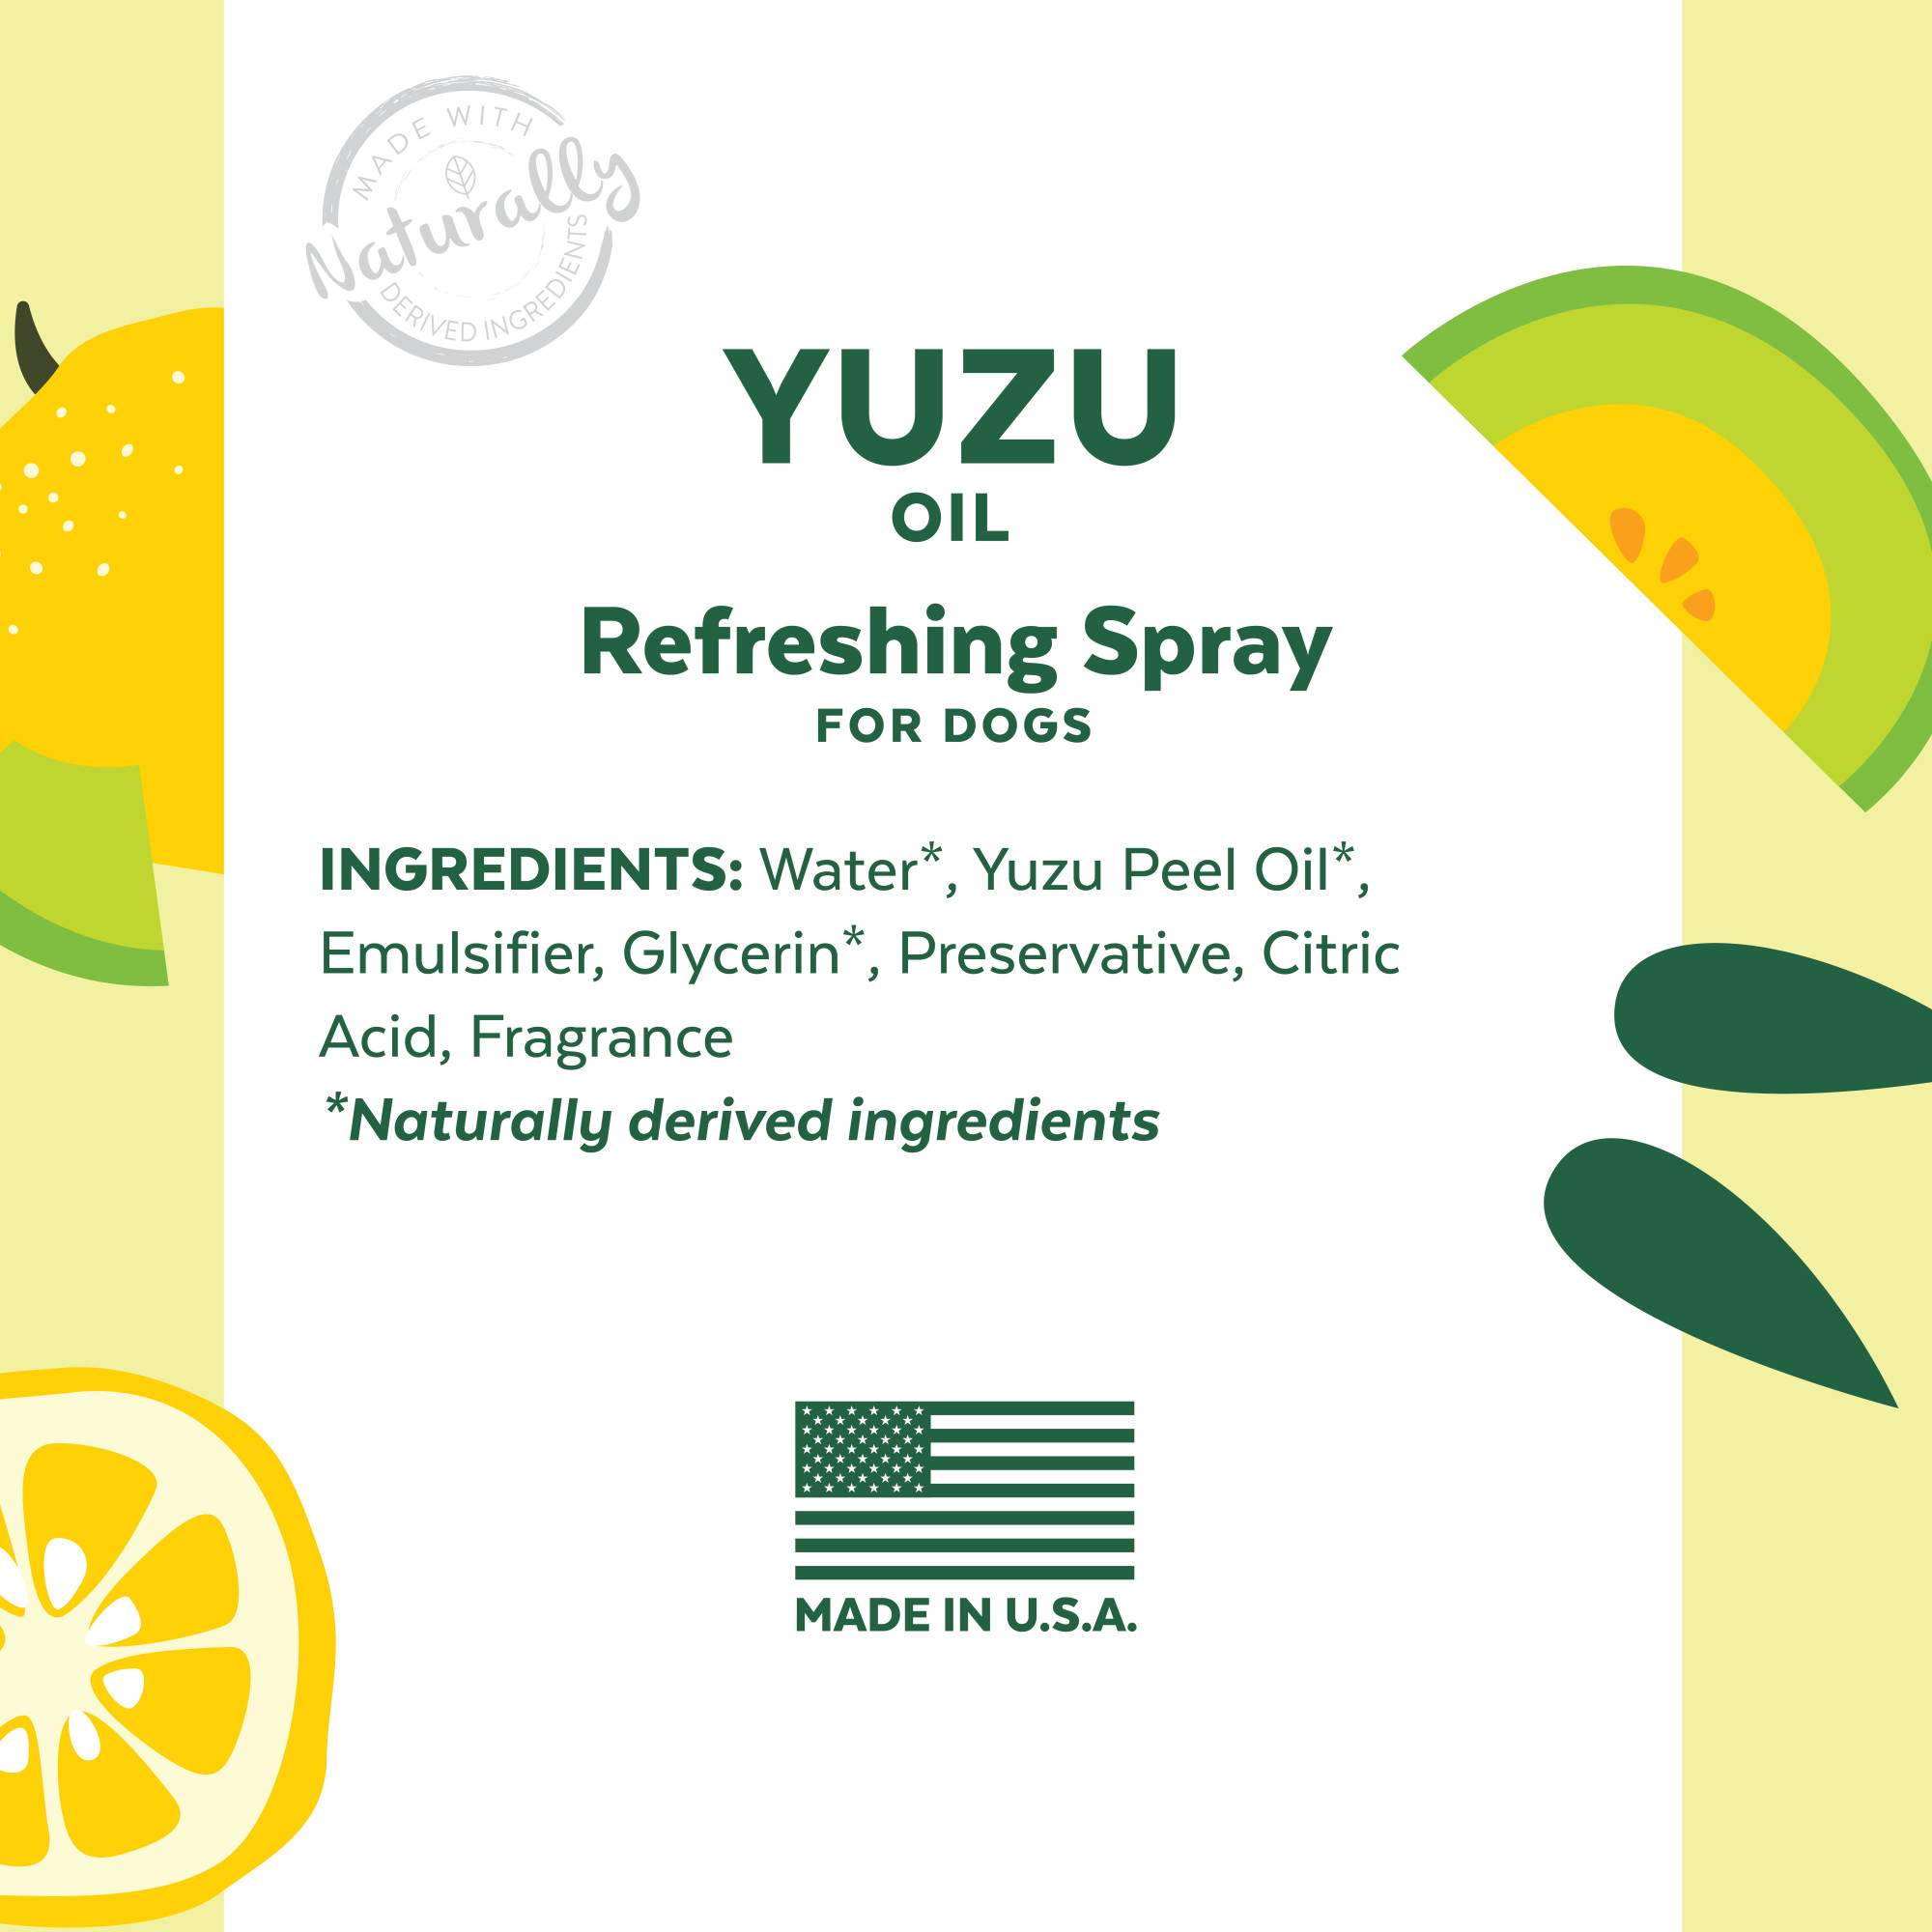 Yuzu Oil Refreshing Spray for Dogs